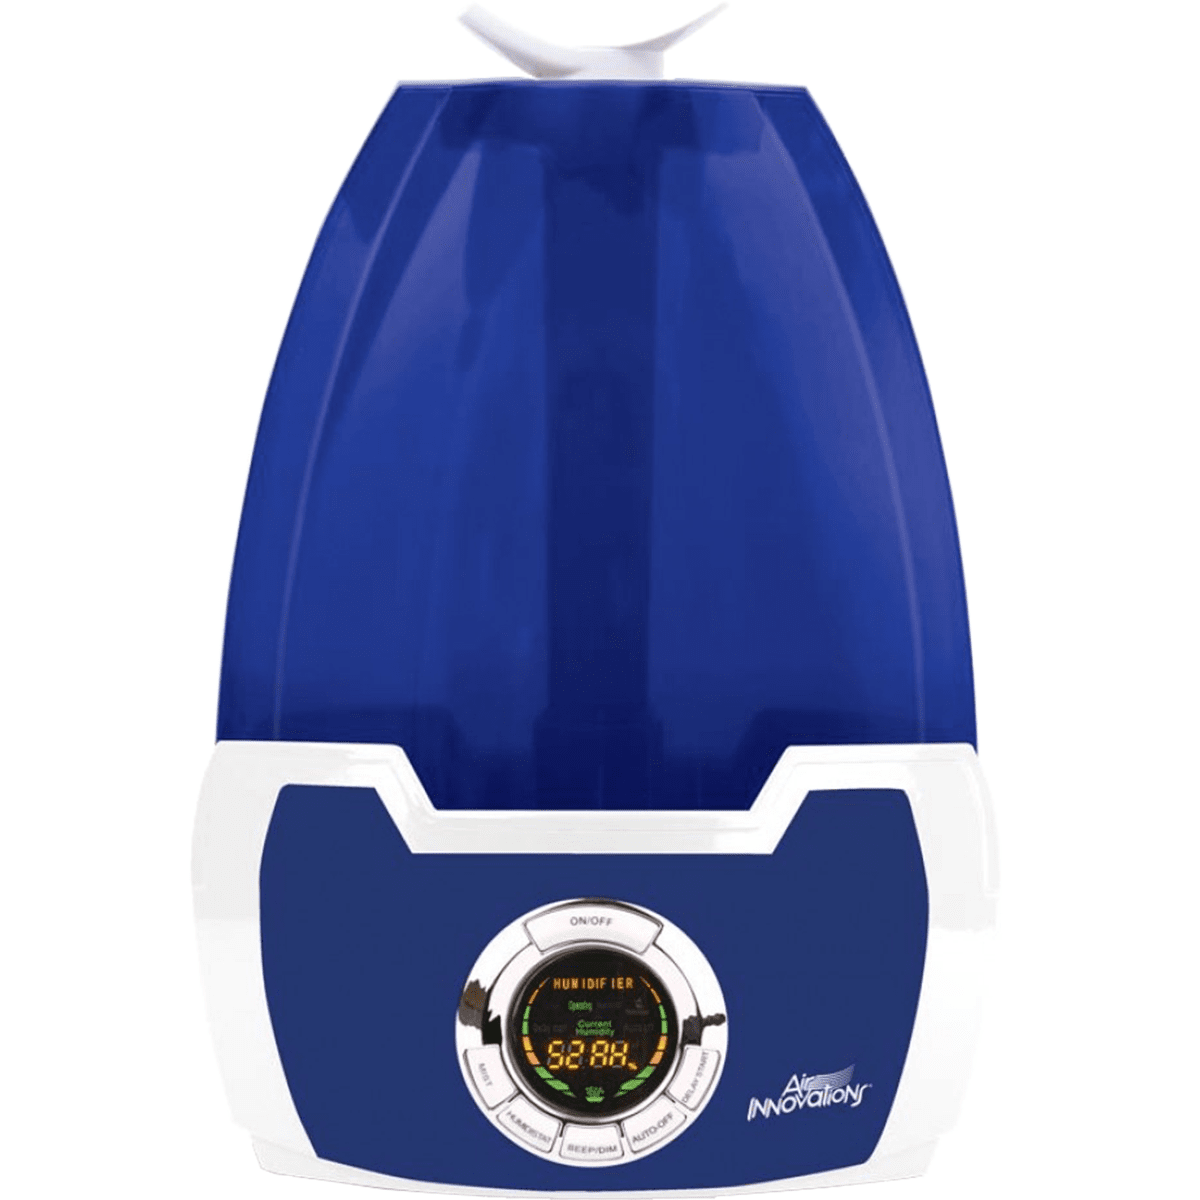 Air Innovations Cool Mist Digital Humidifier - Blue (mh-602-blue)